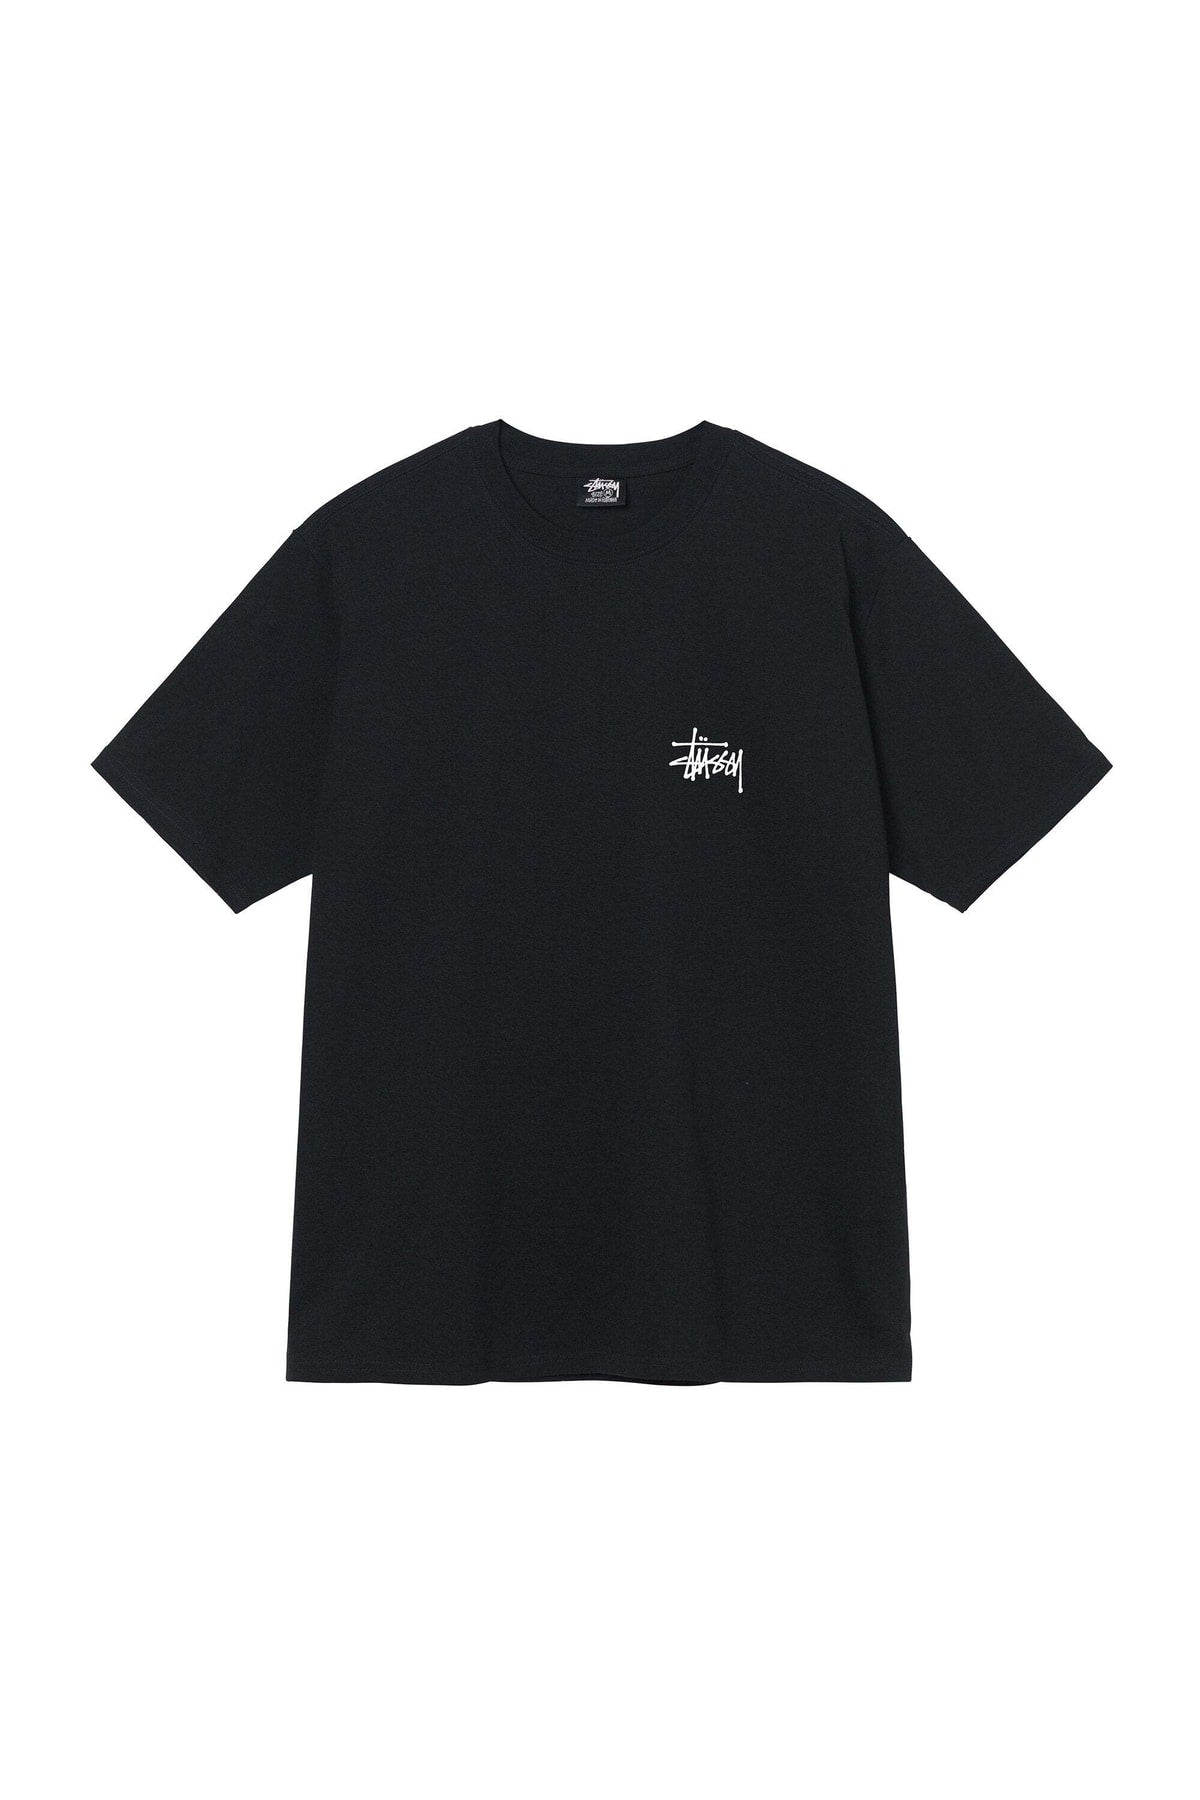 Black Back Printed Unisex Short Sleeve T-shirt